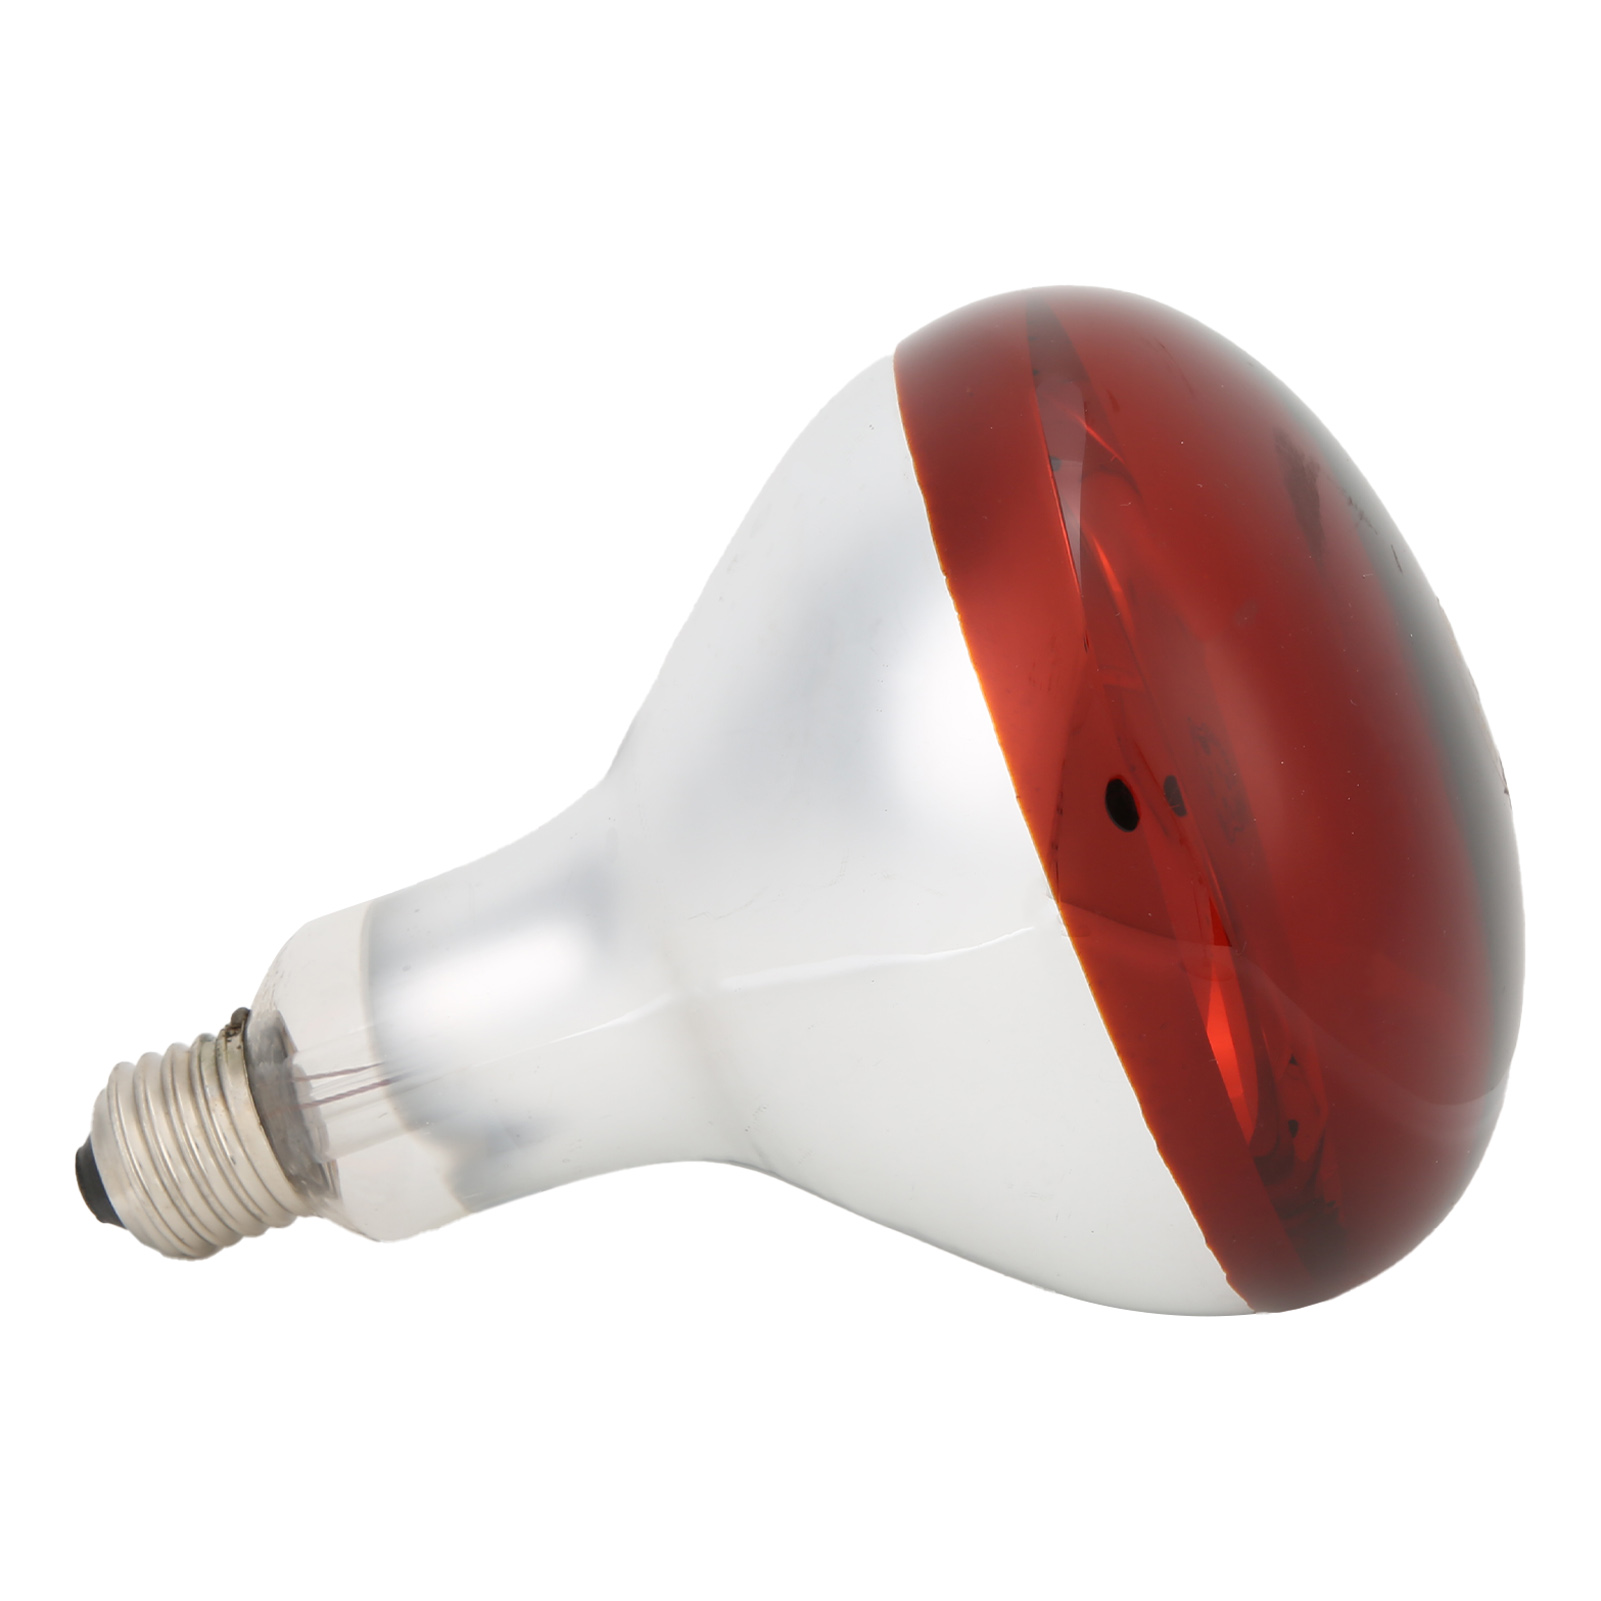 Chicks Heat Lamp Bulb Infrared Basking Spot Heat Reptile Heat Lamp Red Bulb  for Brooder 220V 250W